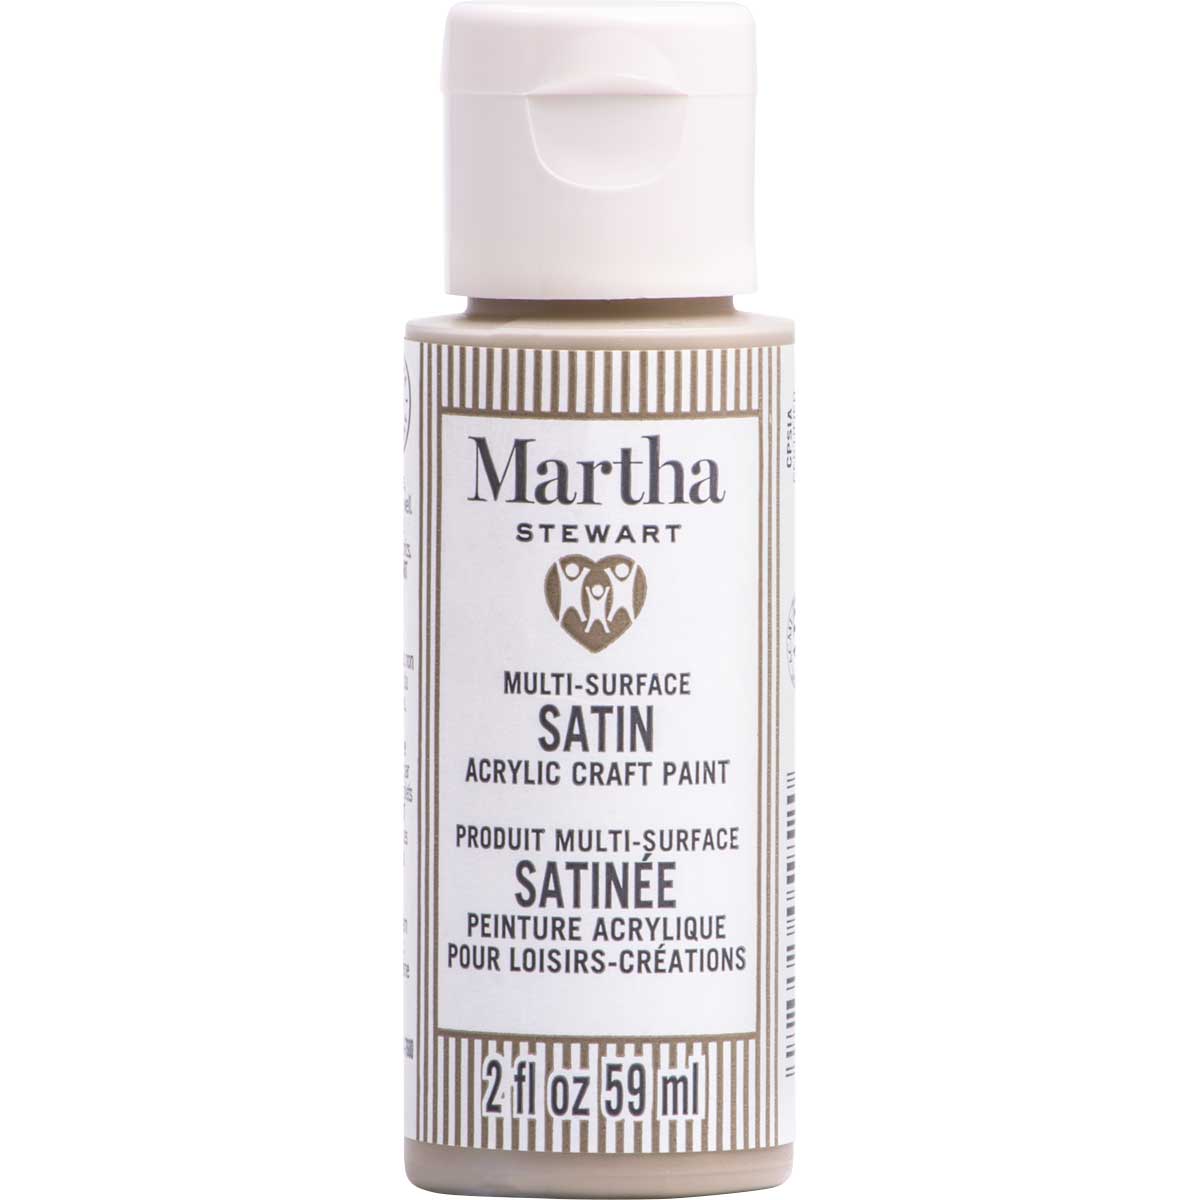 Martha Stewart ® Multi-Surface Satin Acrylic Craft Paint CPSIA - Oat, 2 oz. - 5952